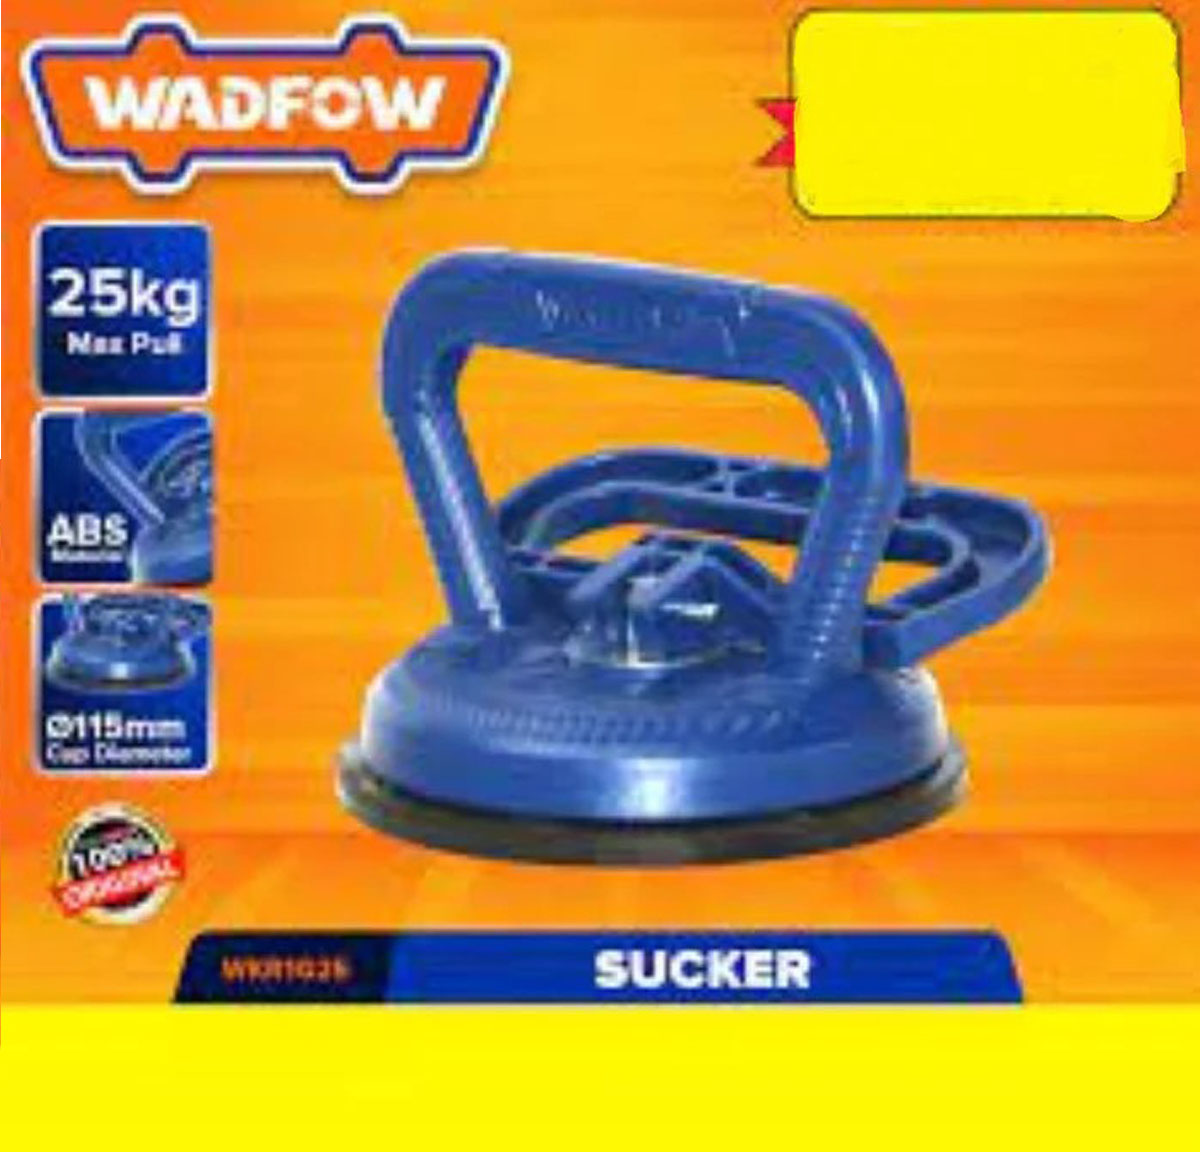 SUCKER 25kg WKR1G25 | Company: Wadfow | Origin: China